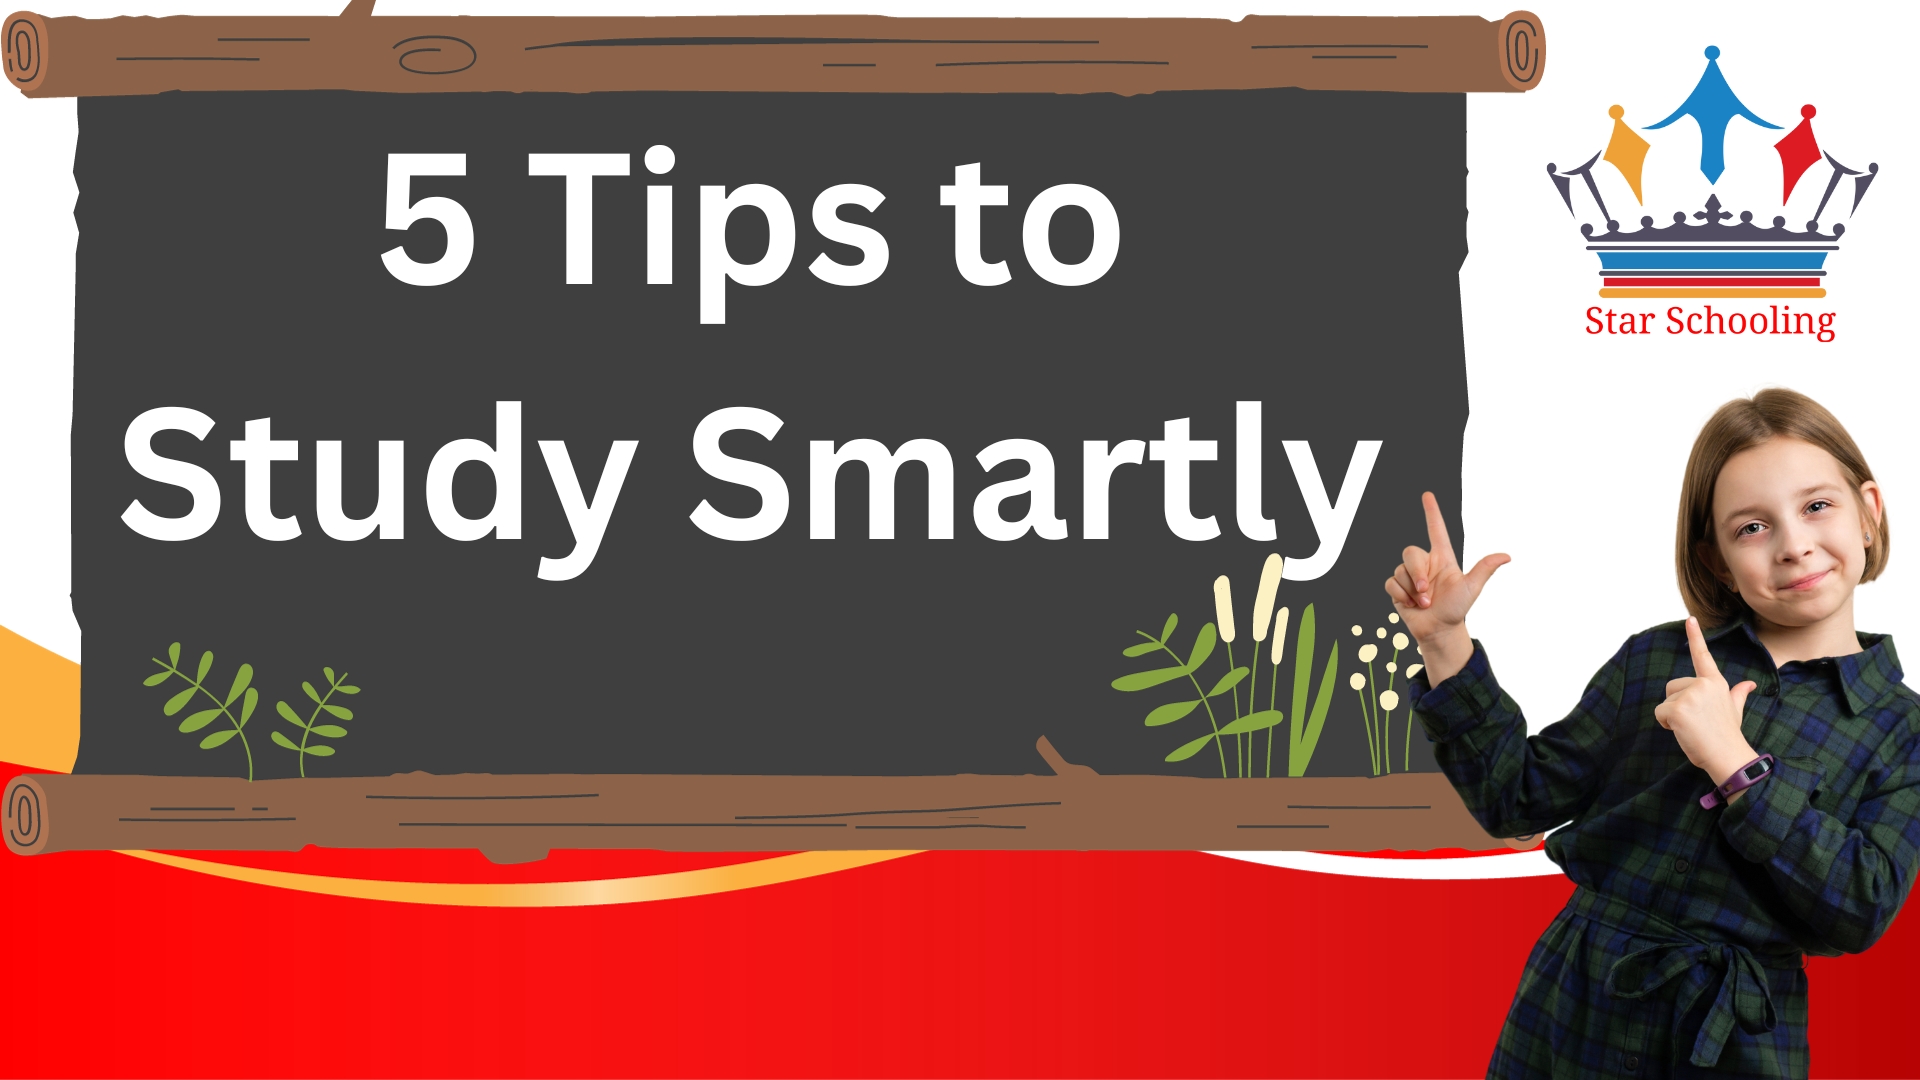 5 Tips to Study Smartly